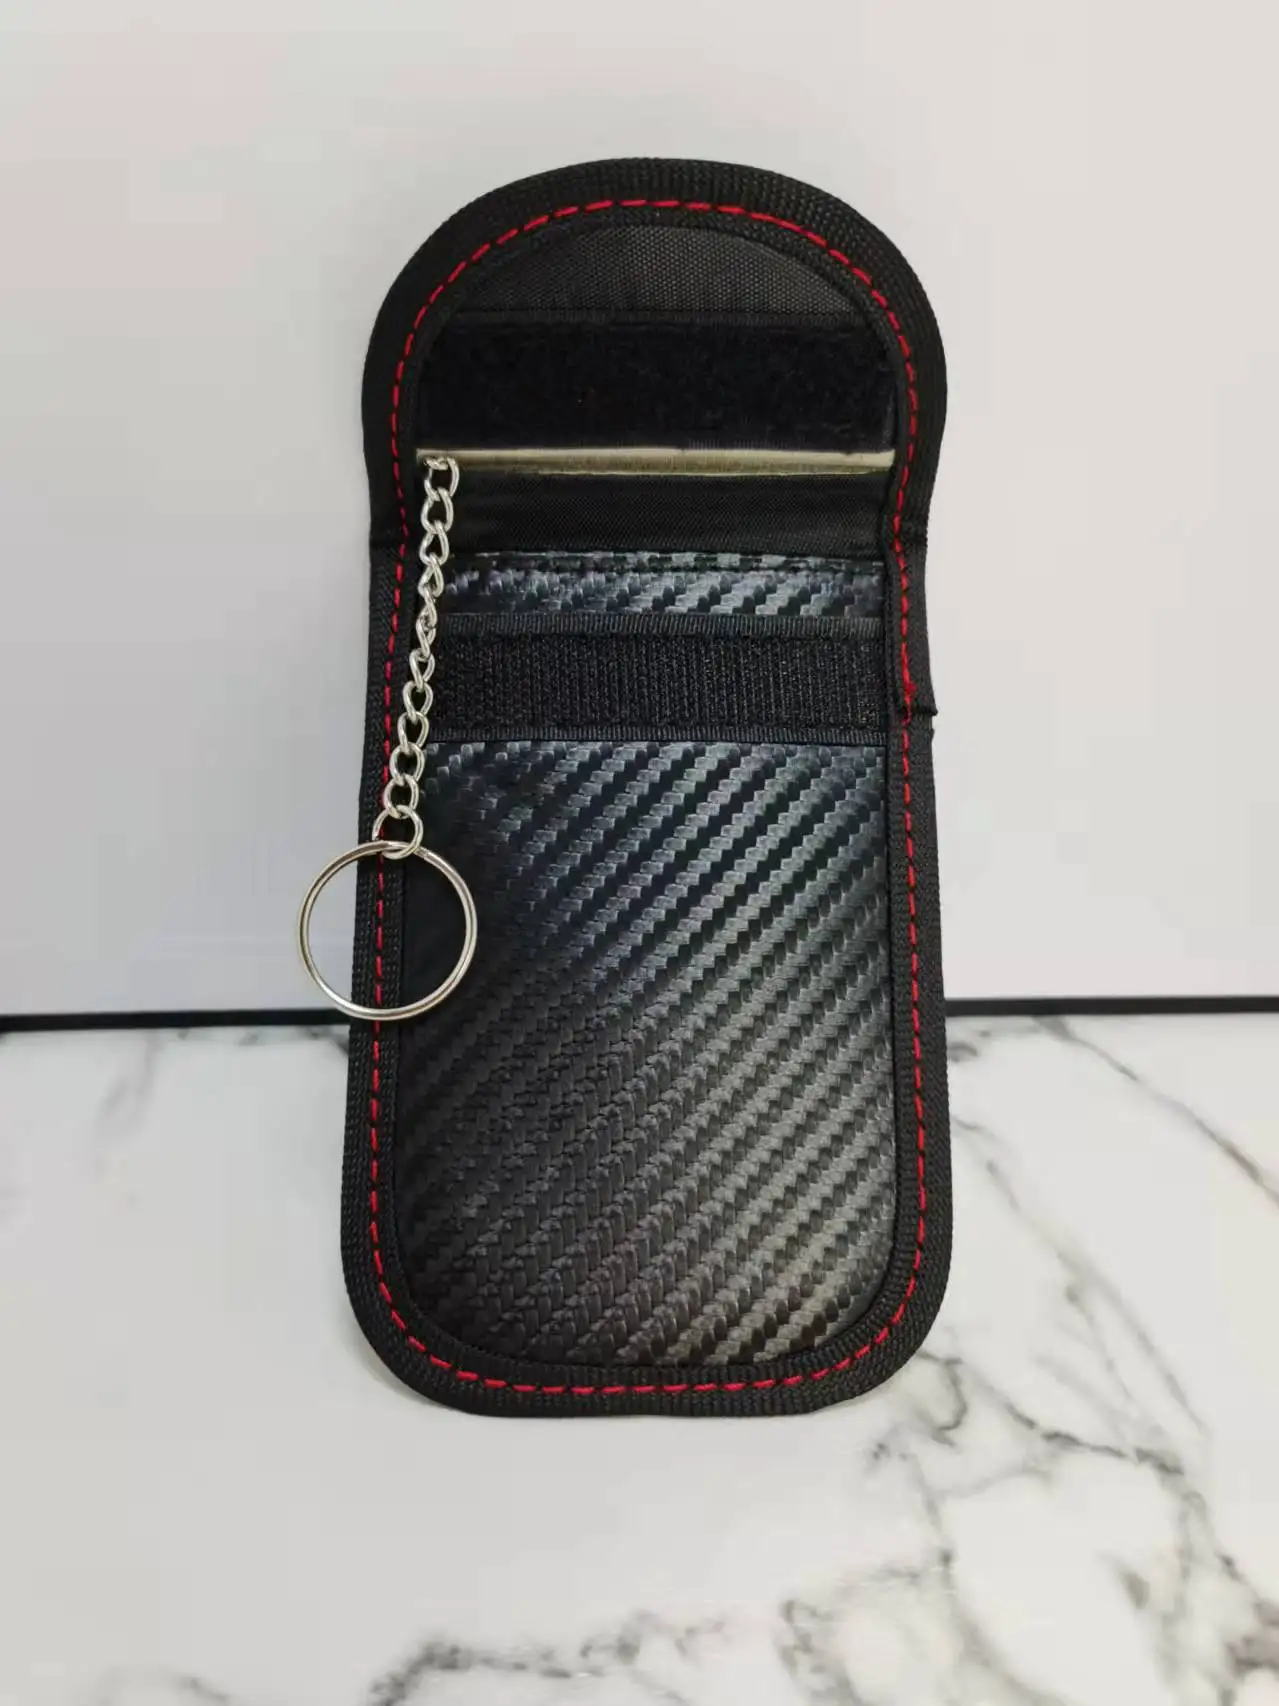 High quality carbon fiber Anti-theft lock signal Block car key wallet pouch